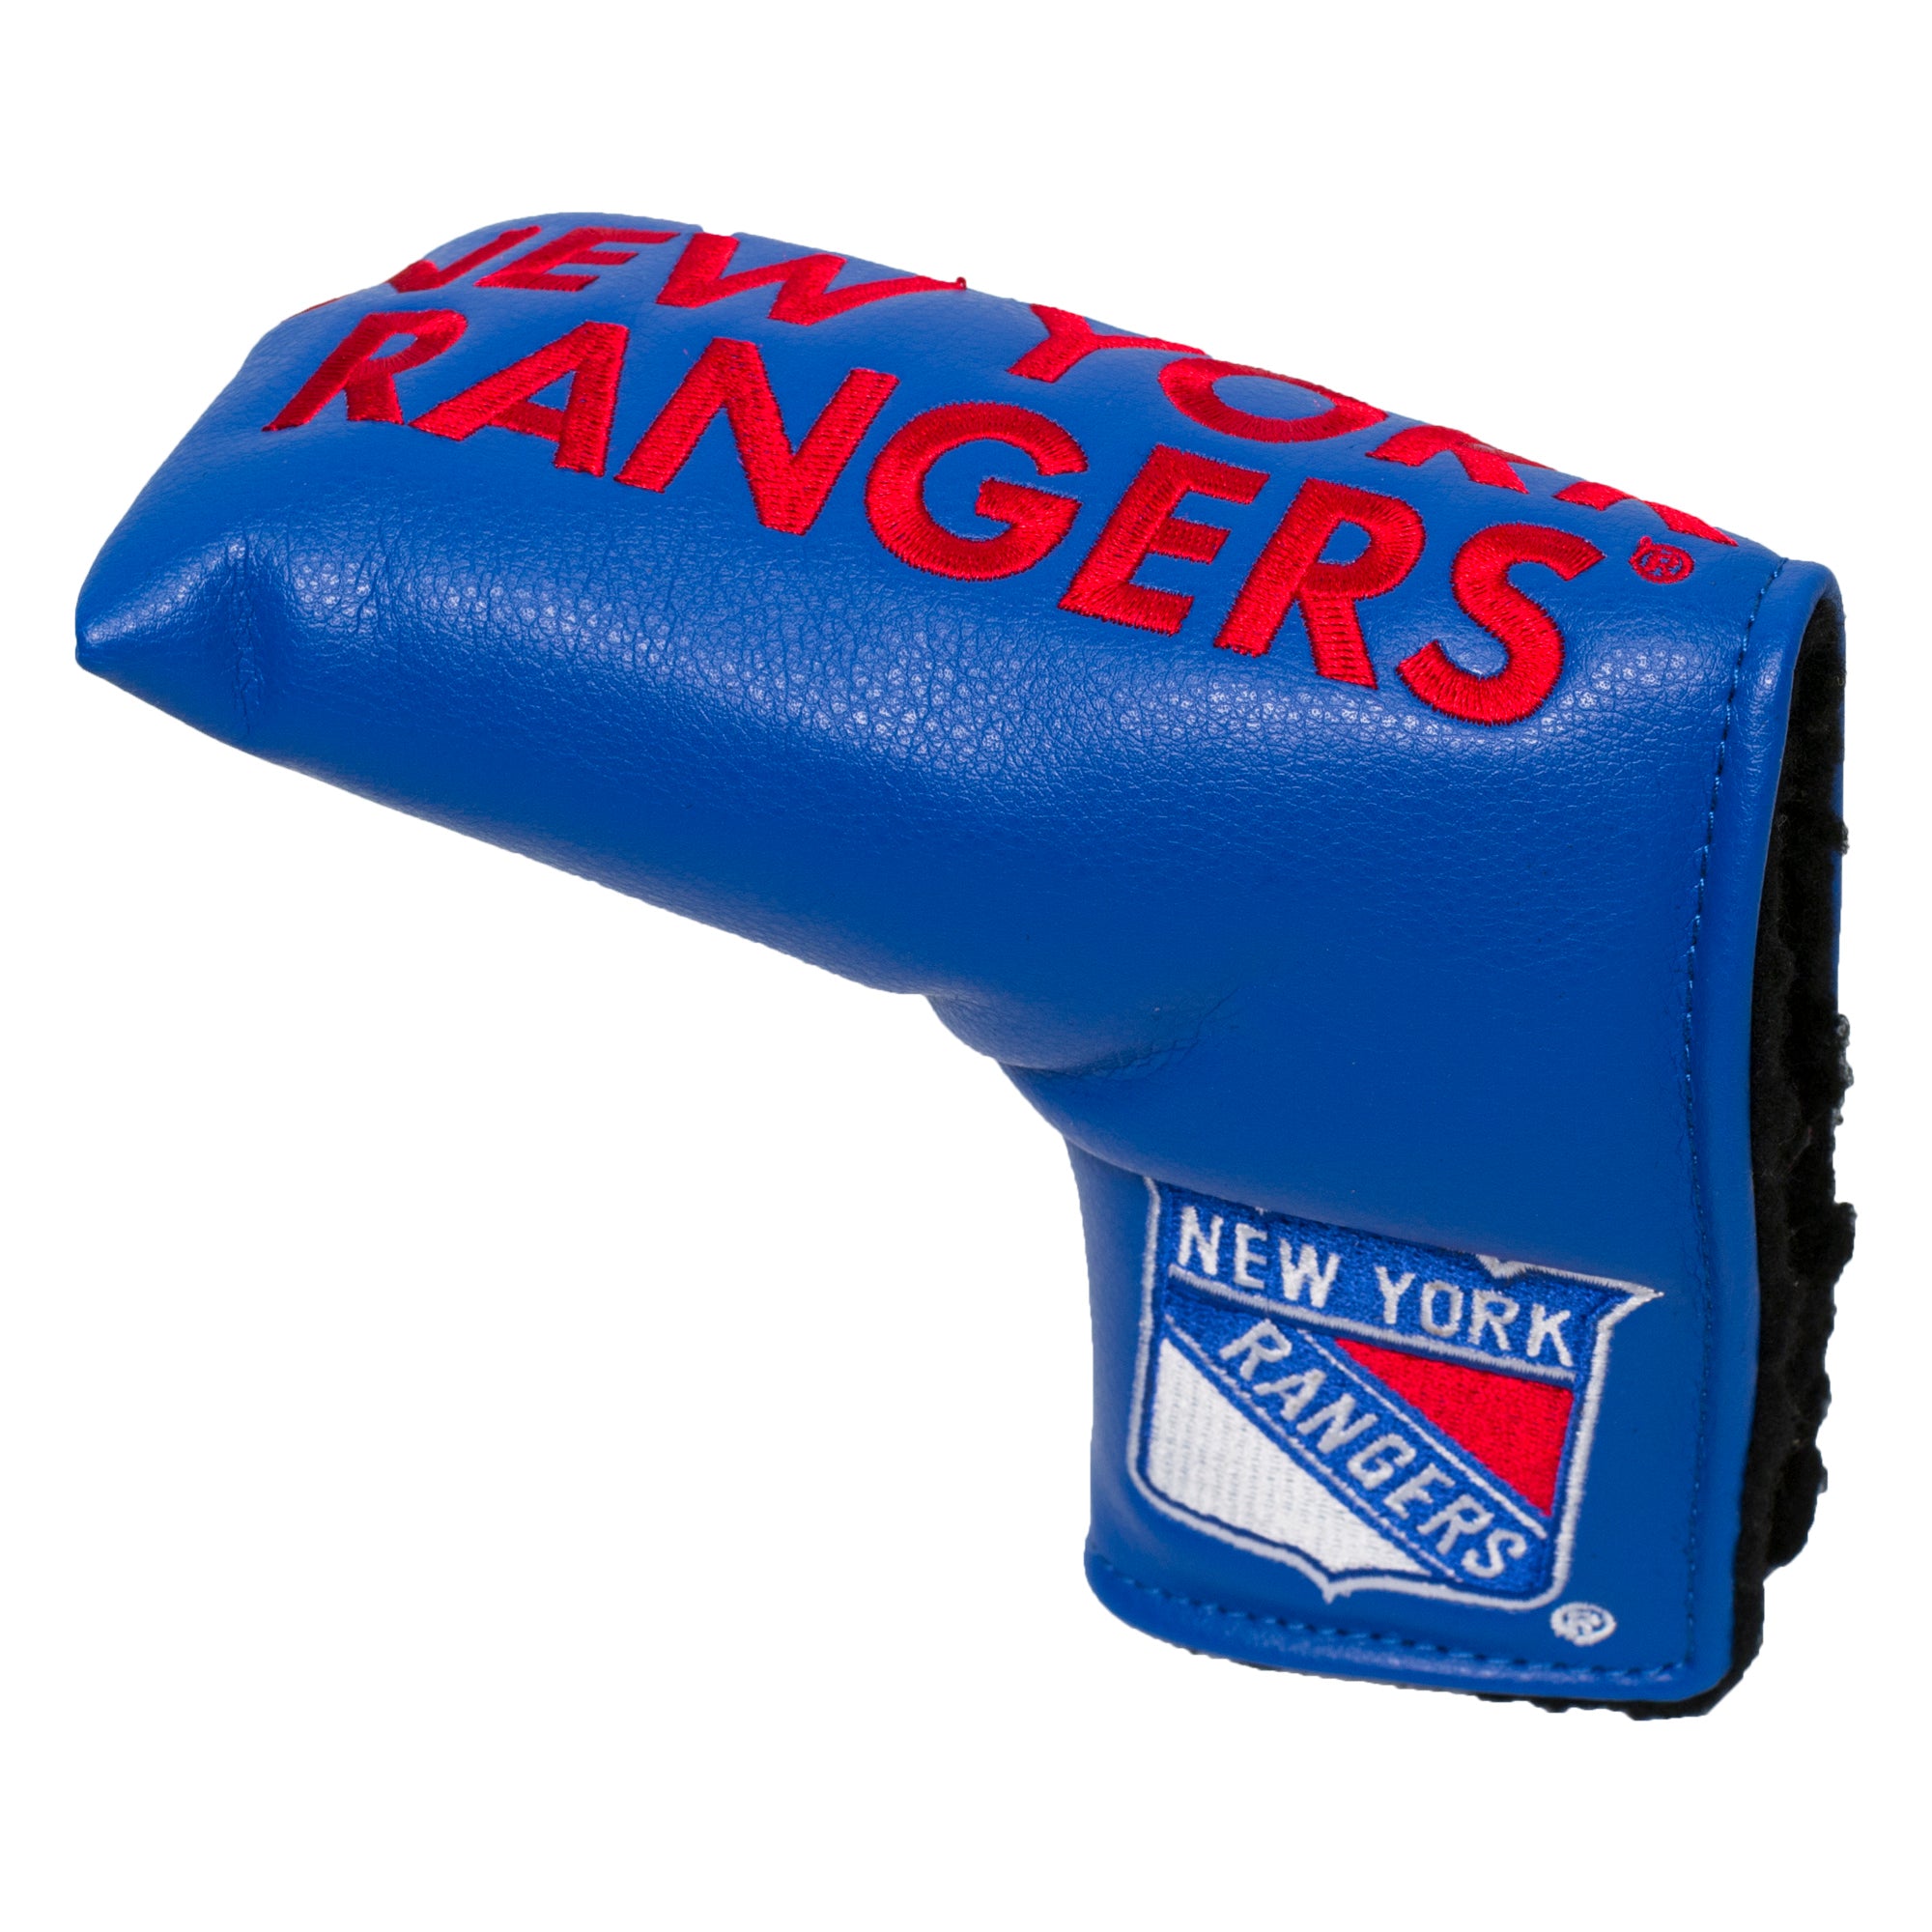 New York Rangers Tour Blade Putter Cover